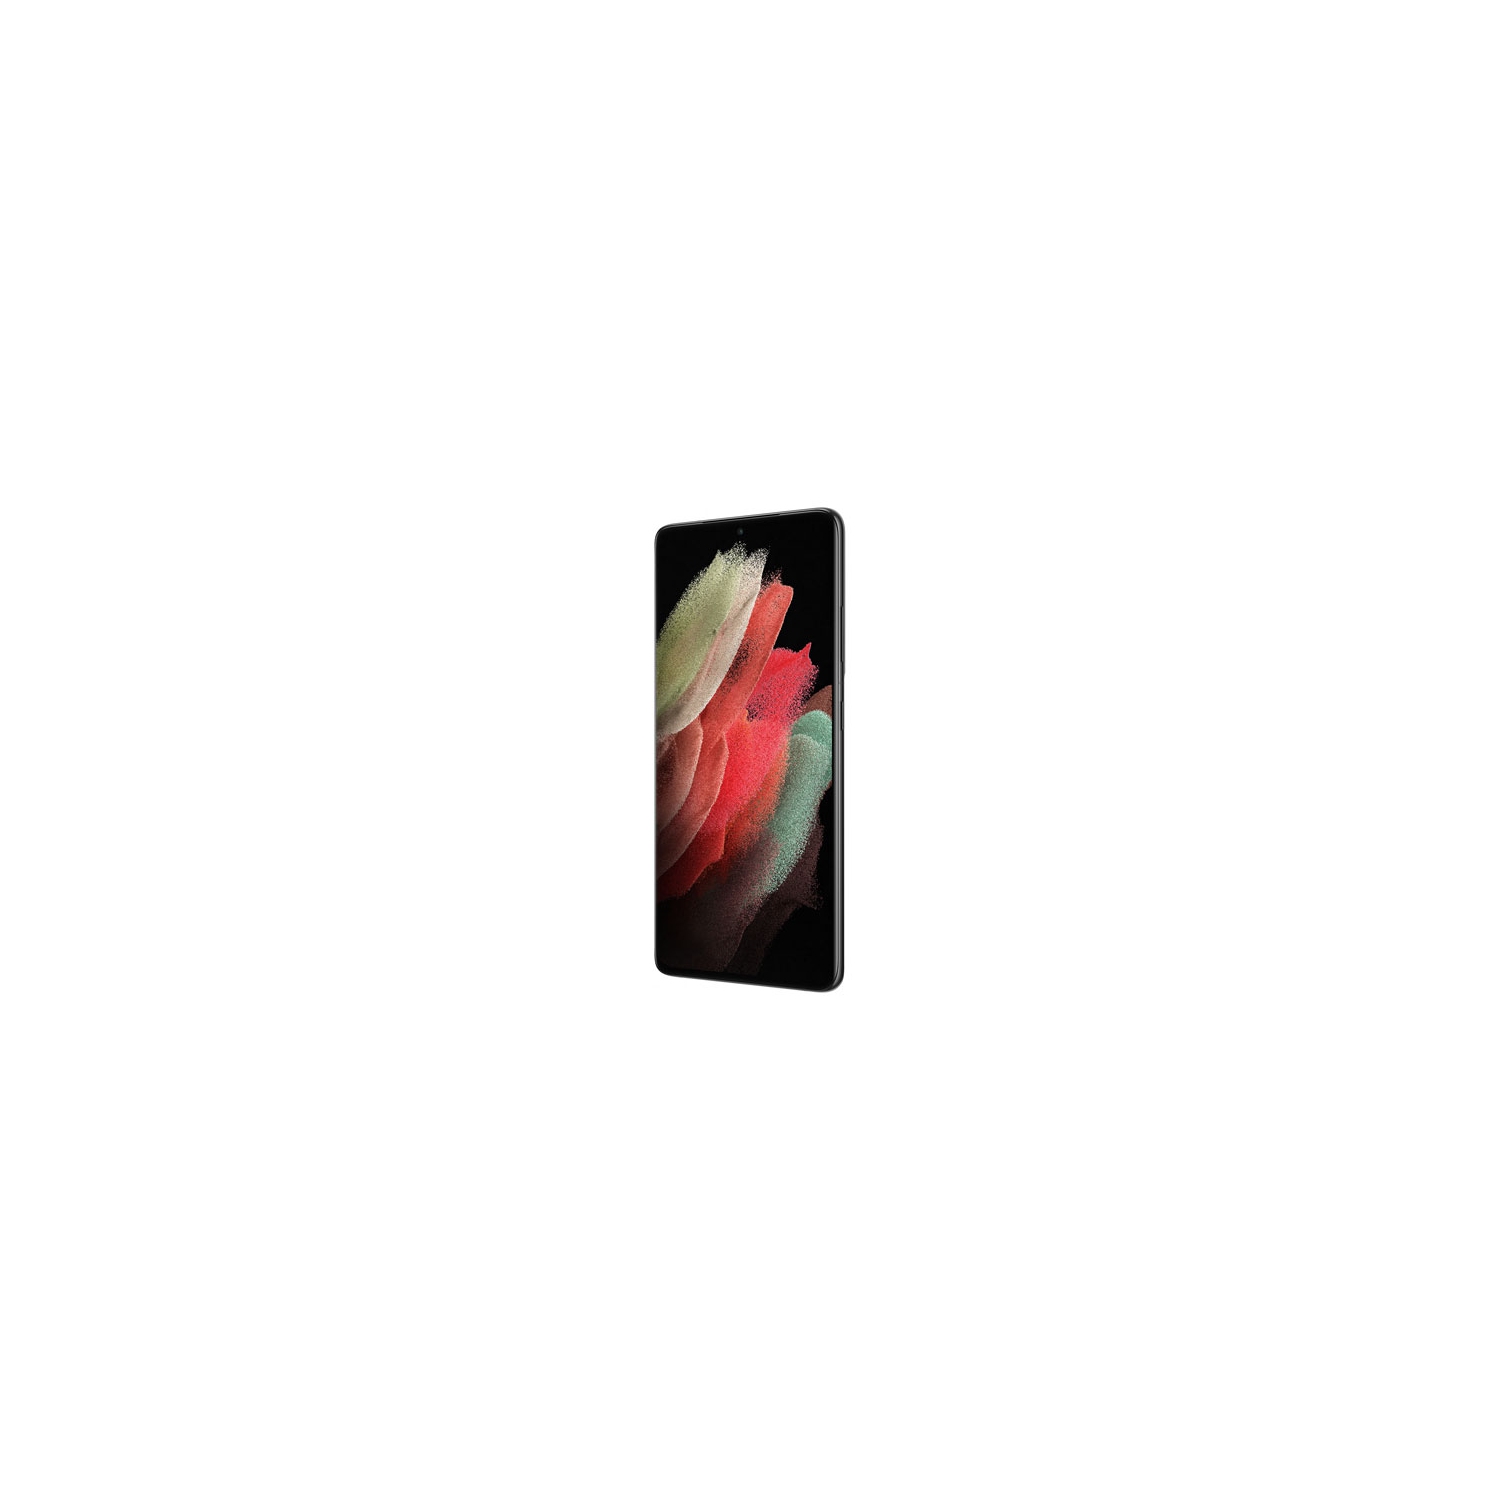 Refurbished (Excellent) - Samsung Galaxy S21 Ultra 5G 256GB - Phantom Black - Unlocked